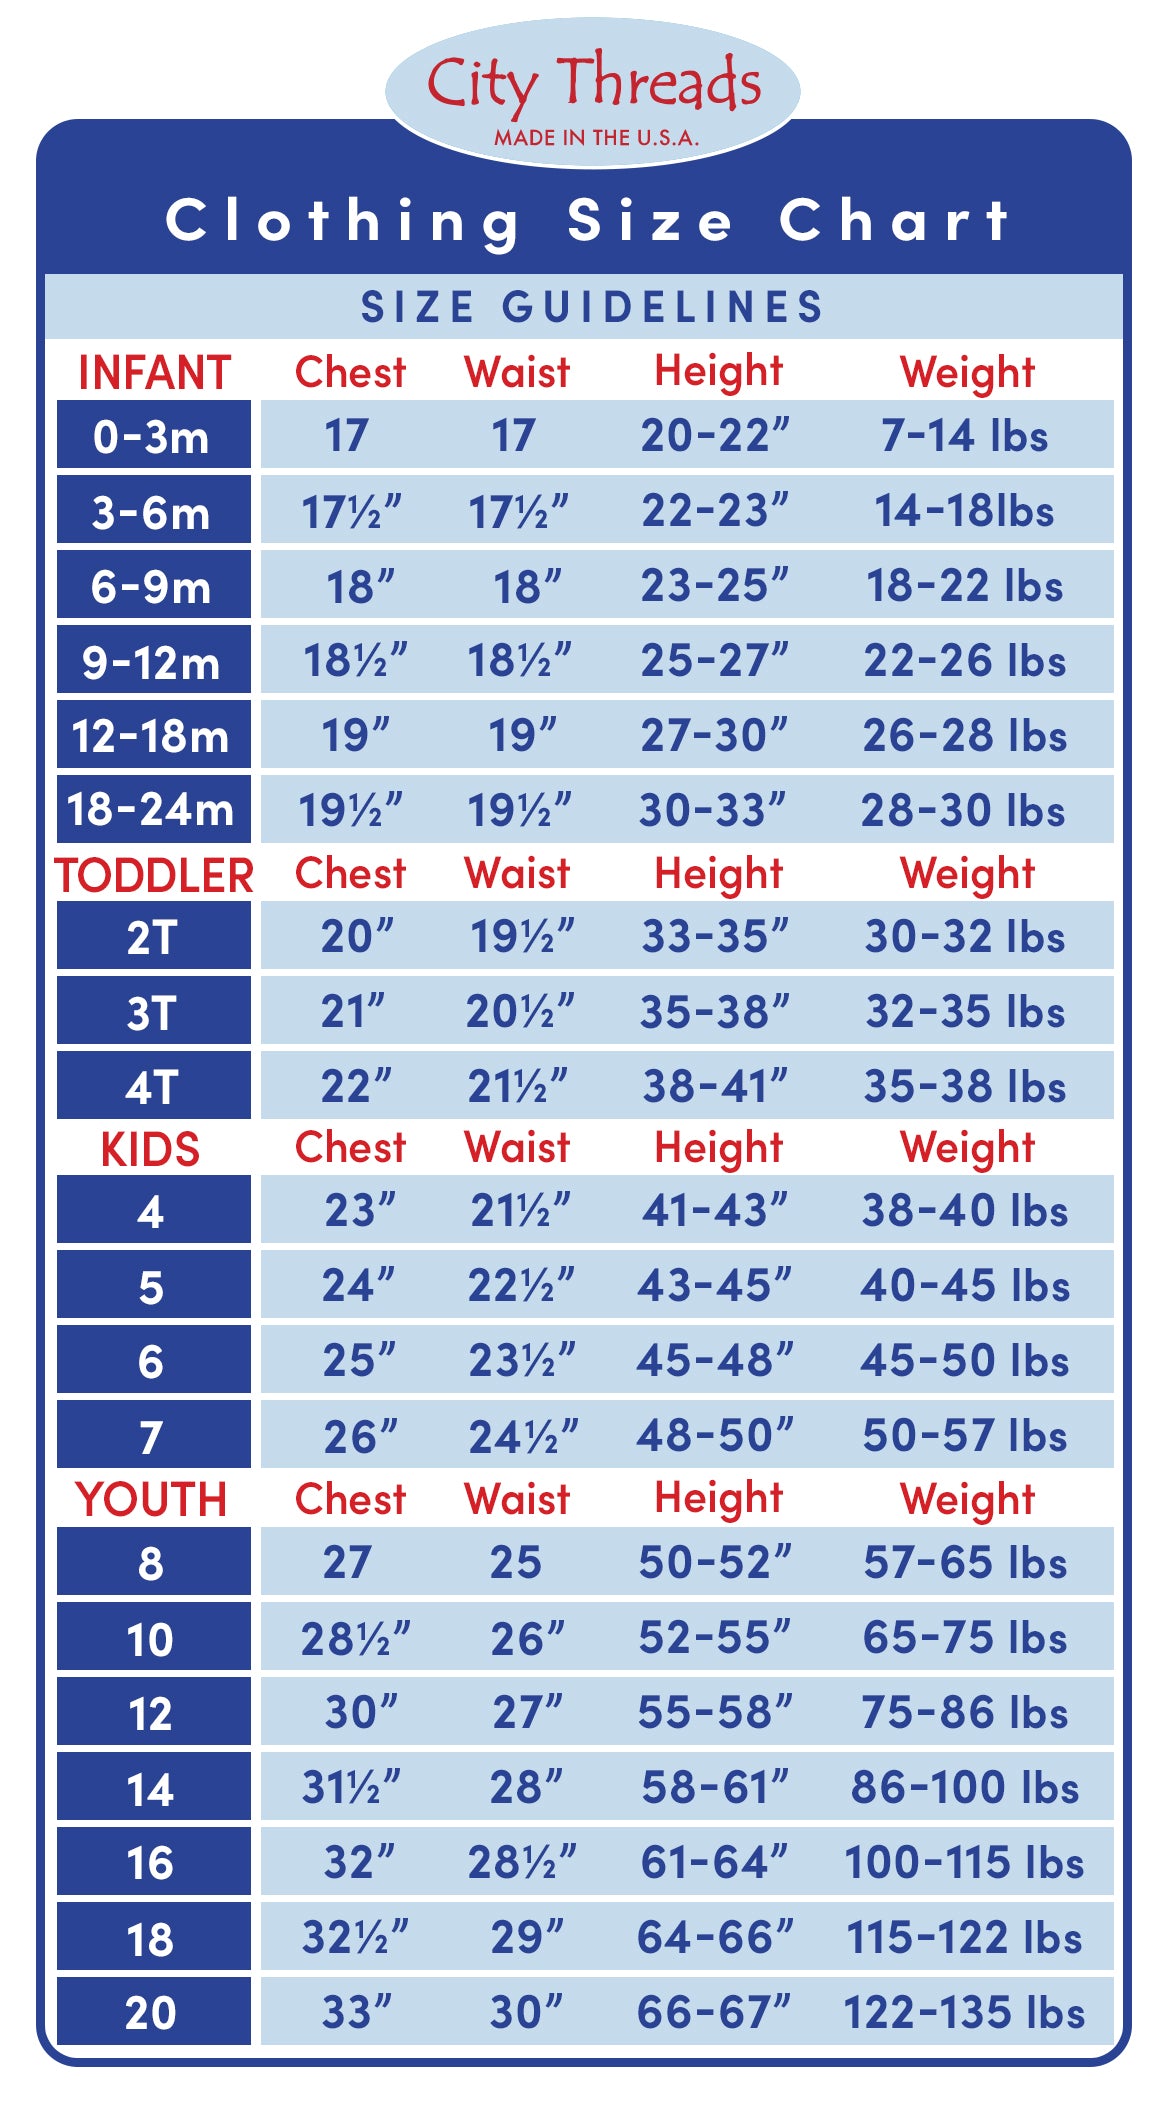 youth 18-20 size chart